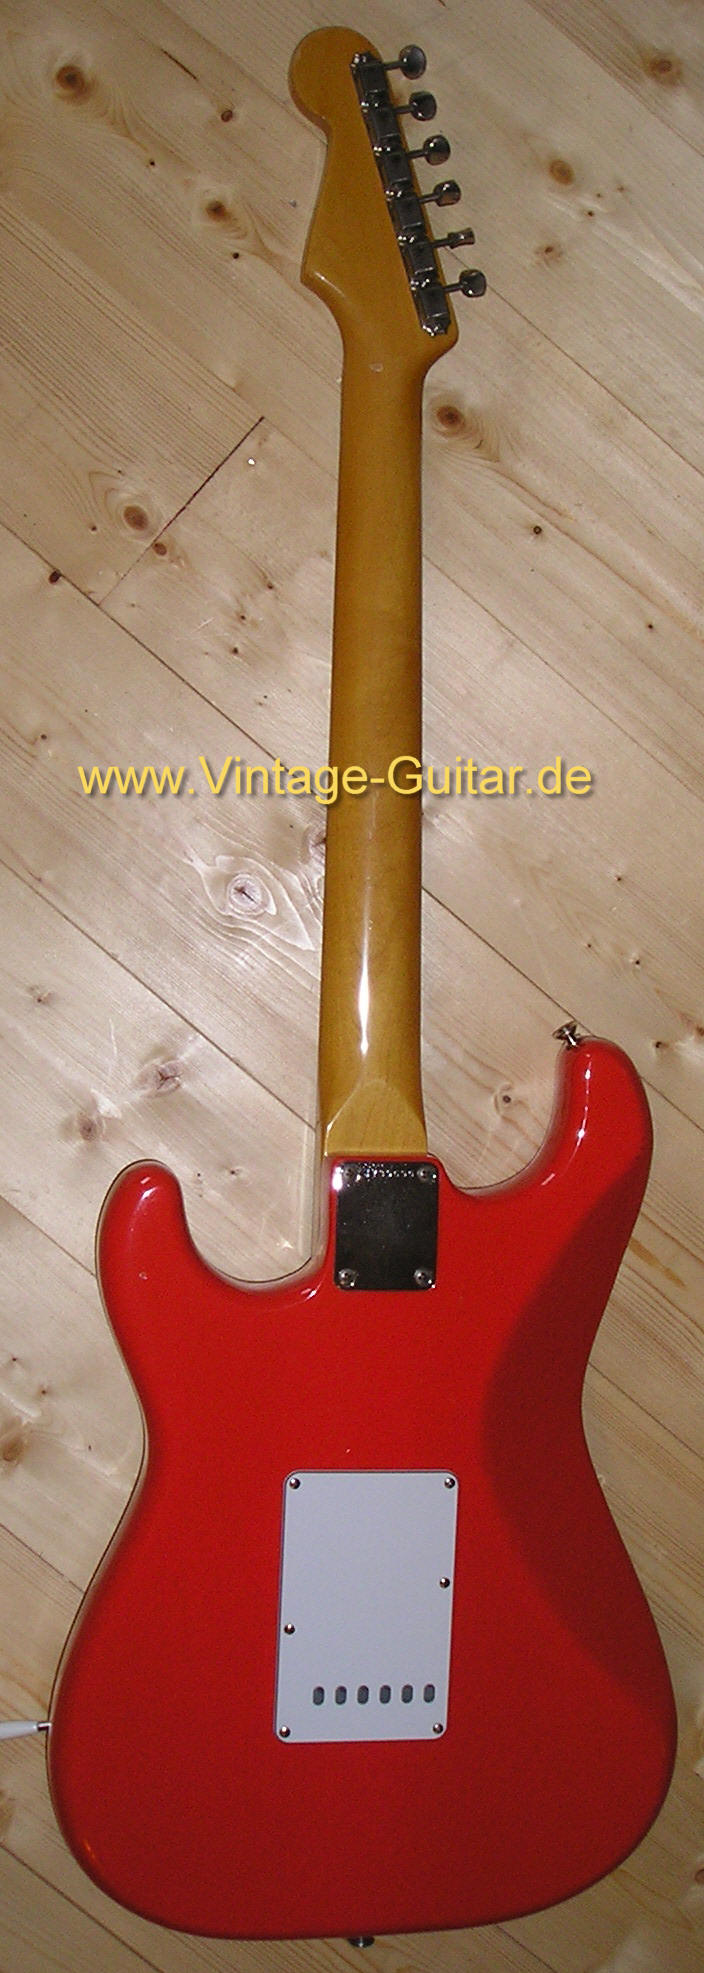 Fender Squire Stratocaster fiestas red JV b.jpg